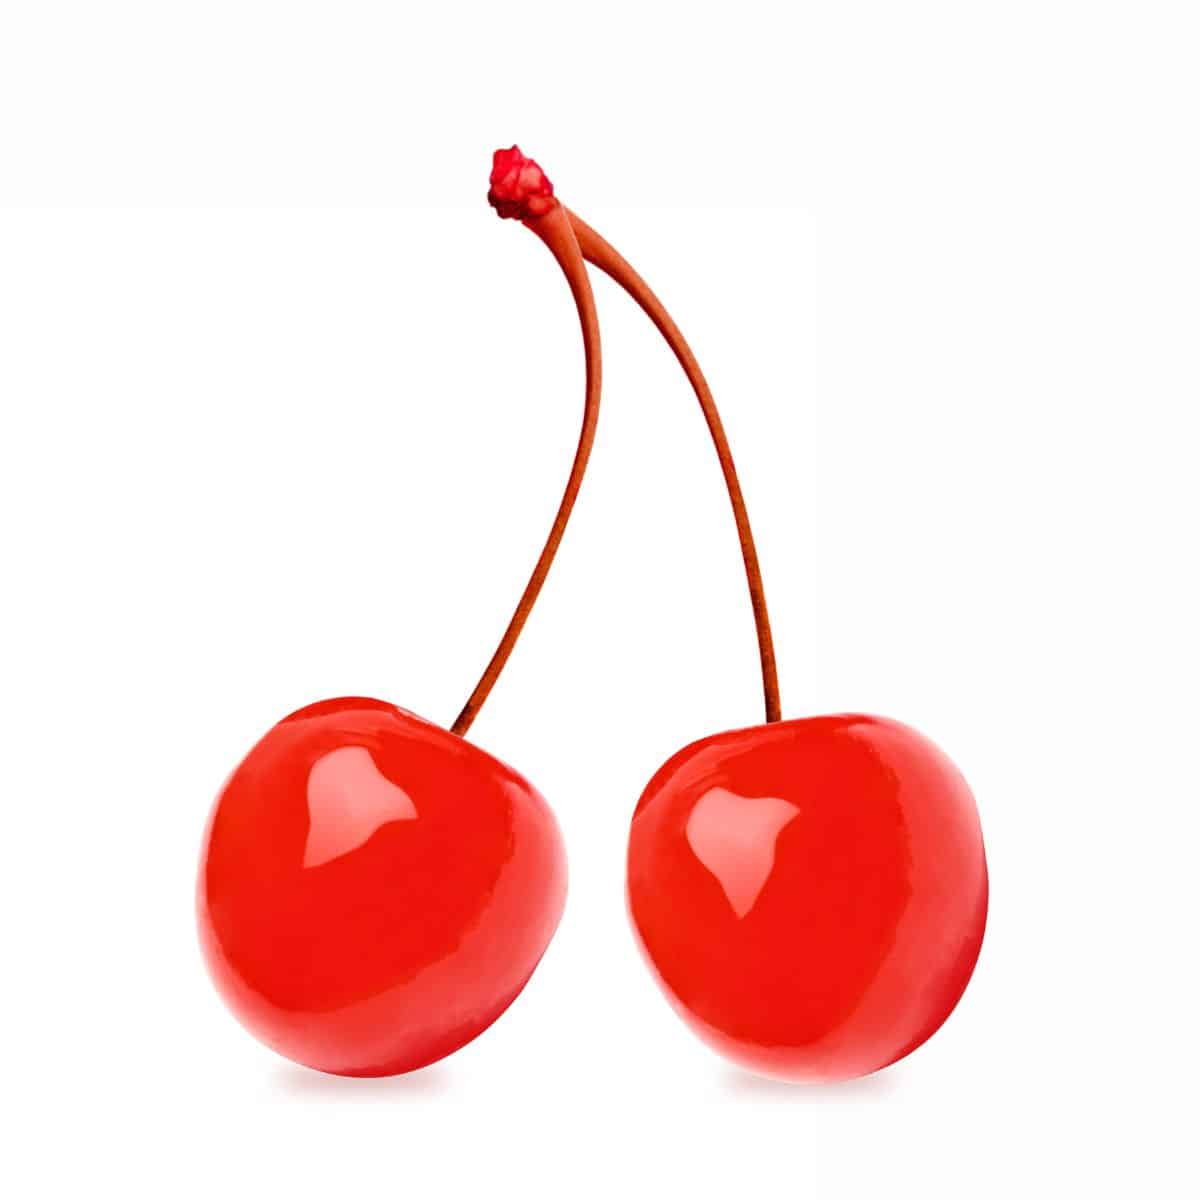 Two maraschino cherries on a white background.